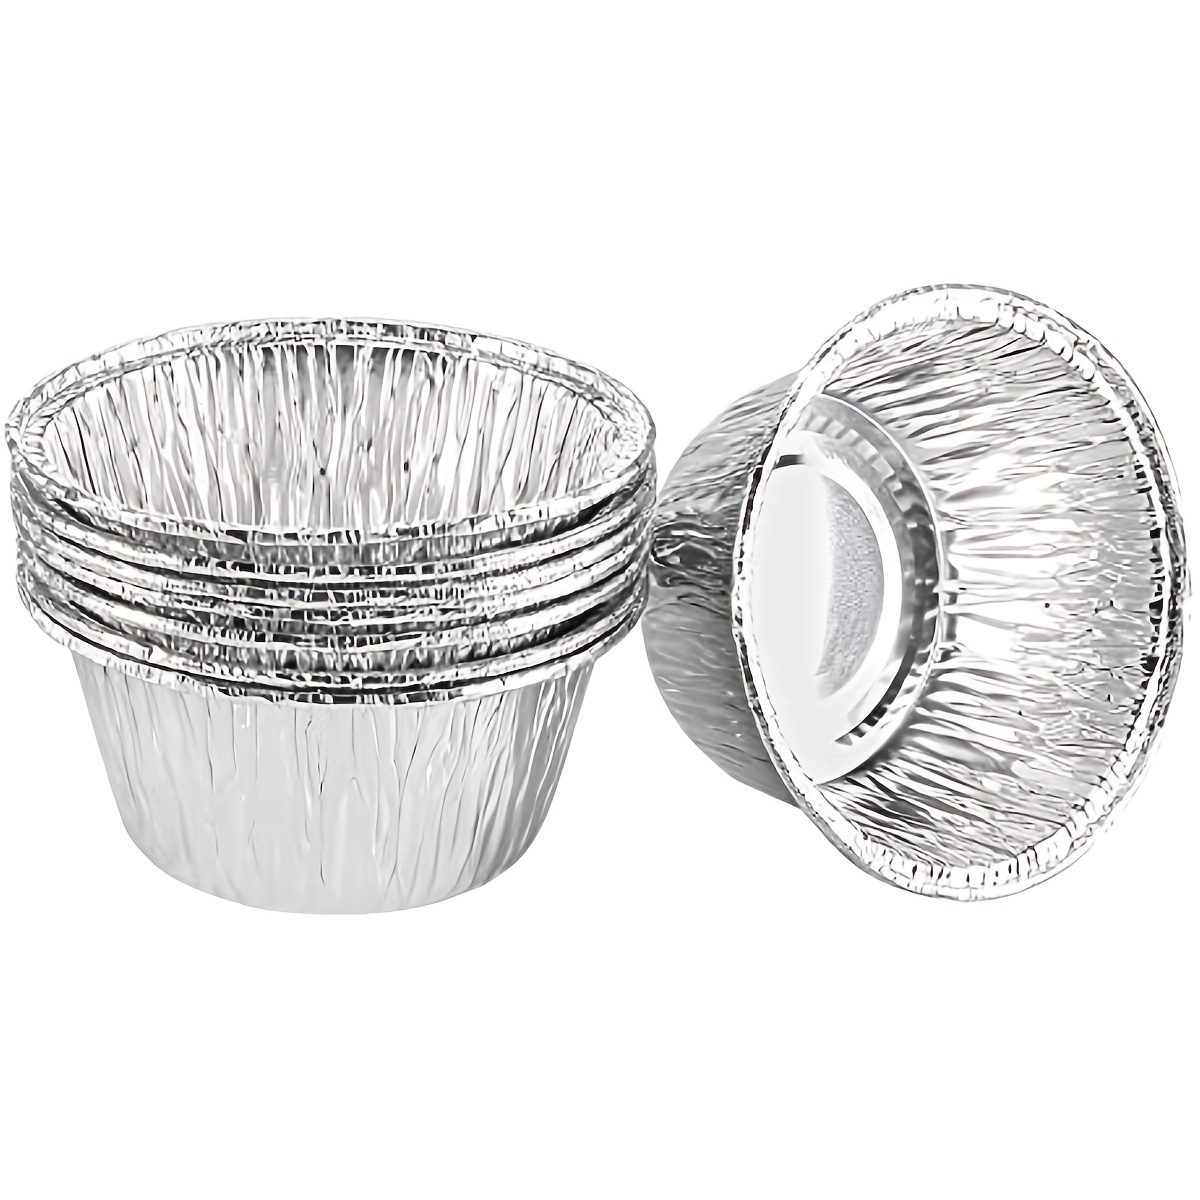 Round Ramekins Muffin Cups, Tin Foil Cupcake Pans, Disposable